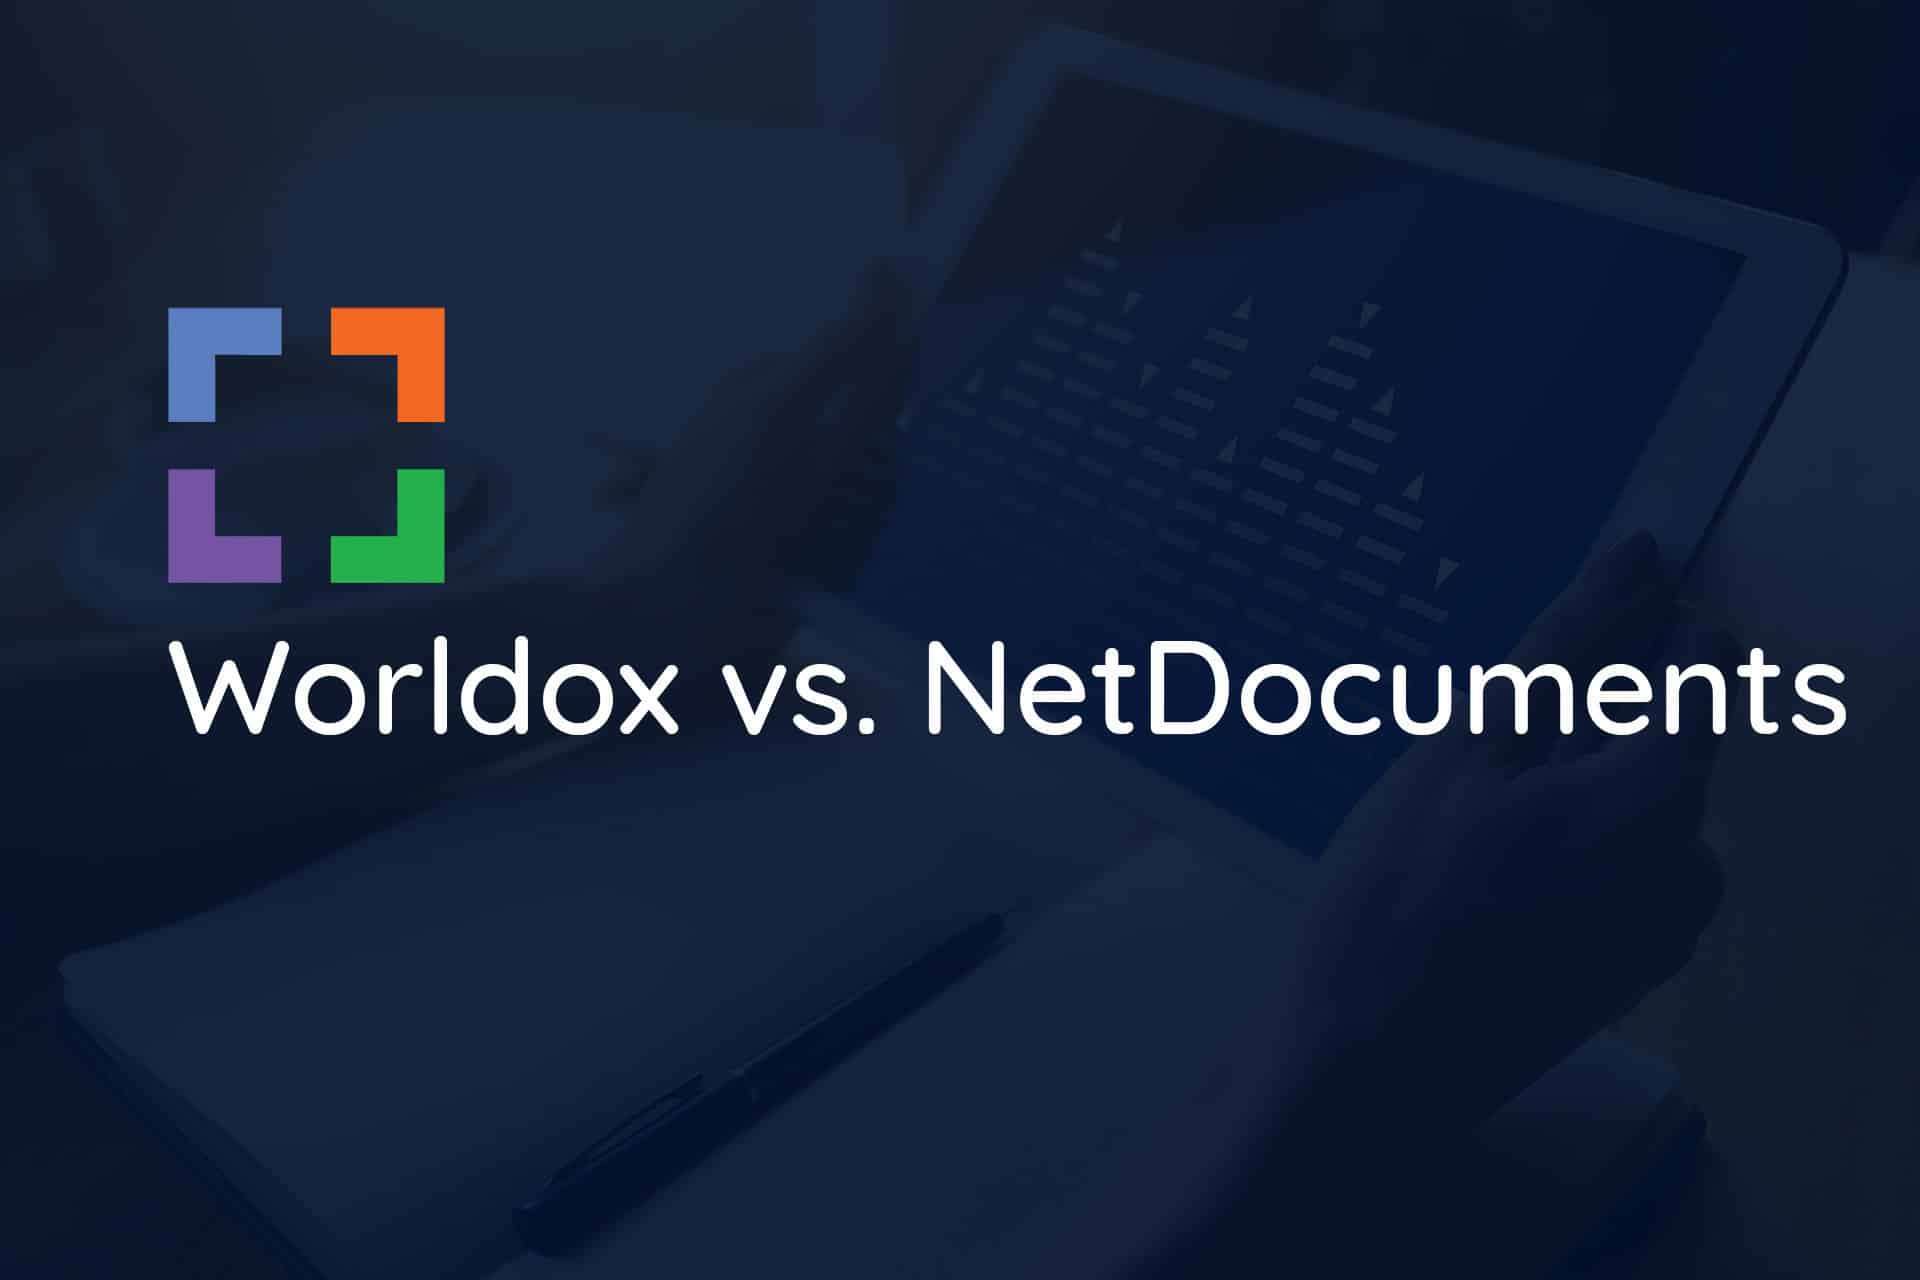 Worldox vs. NetDocuments